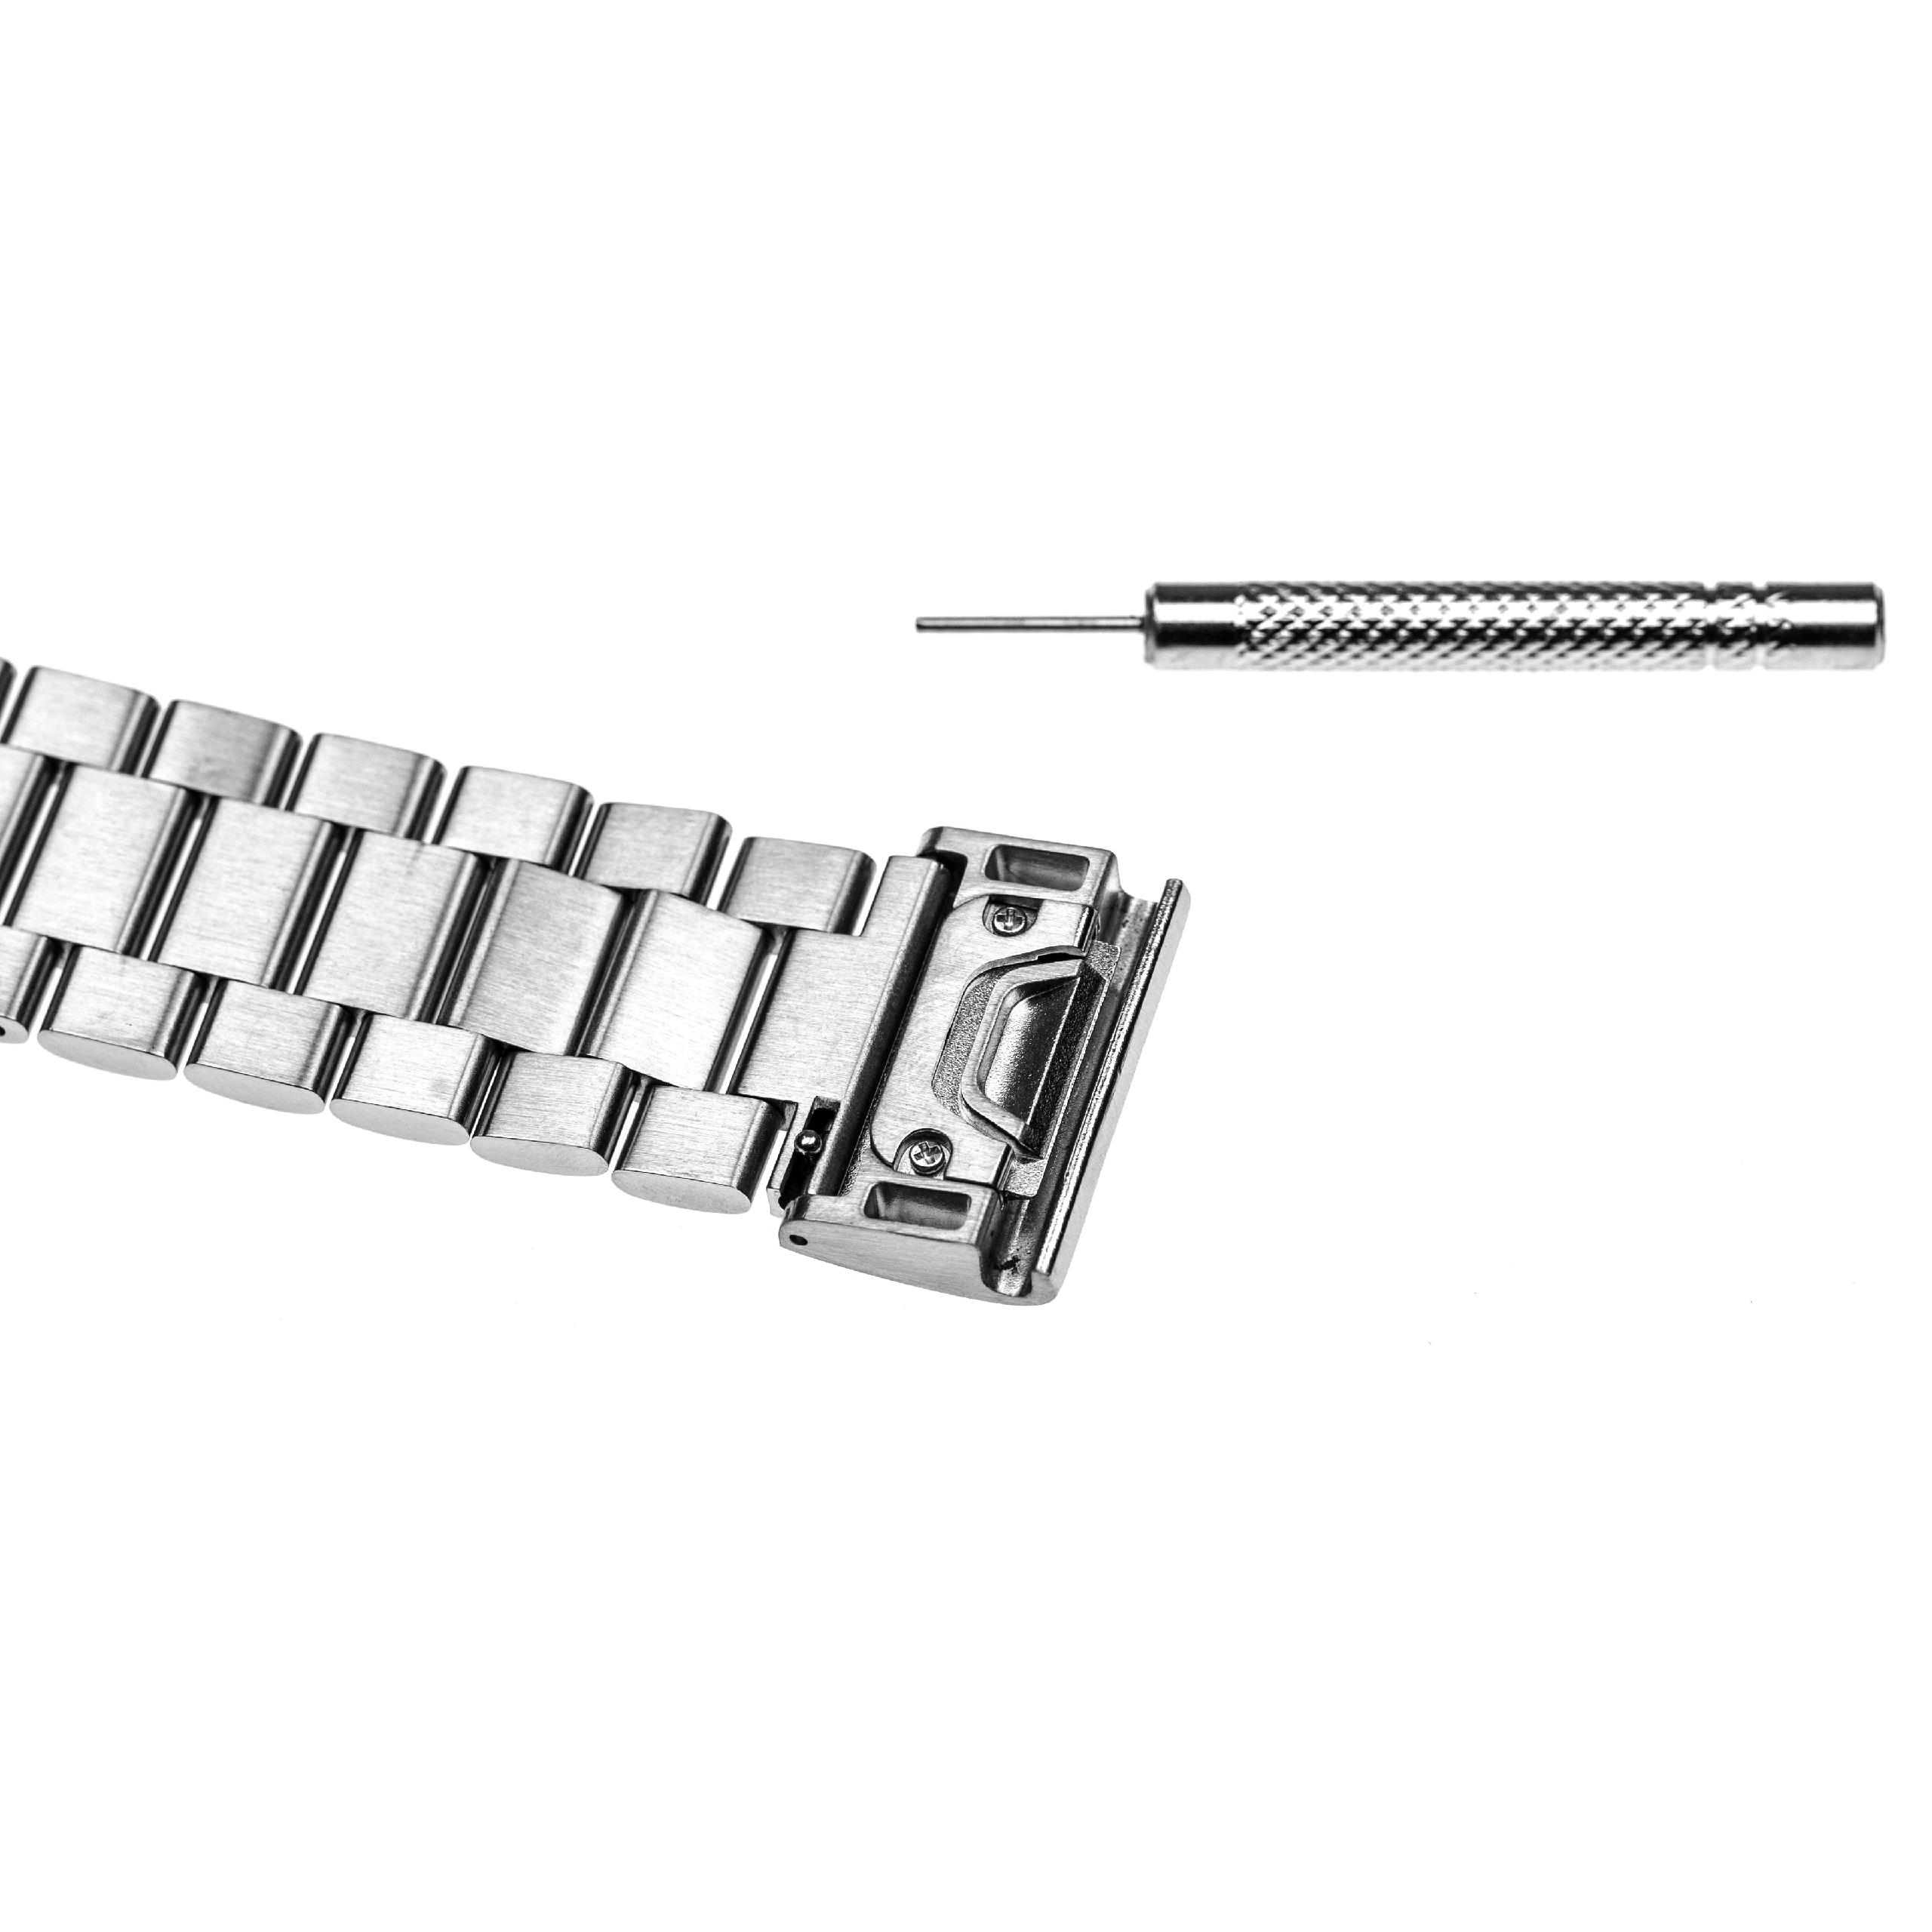 wristband for Garmin Fenix Smartwatch - 20.4 cm long, 26mm wide, stainless steel, silver